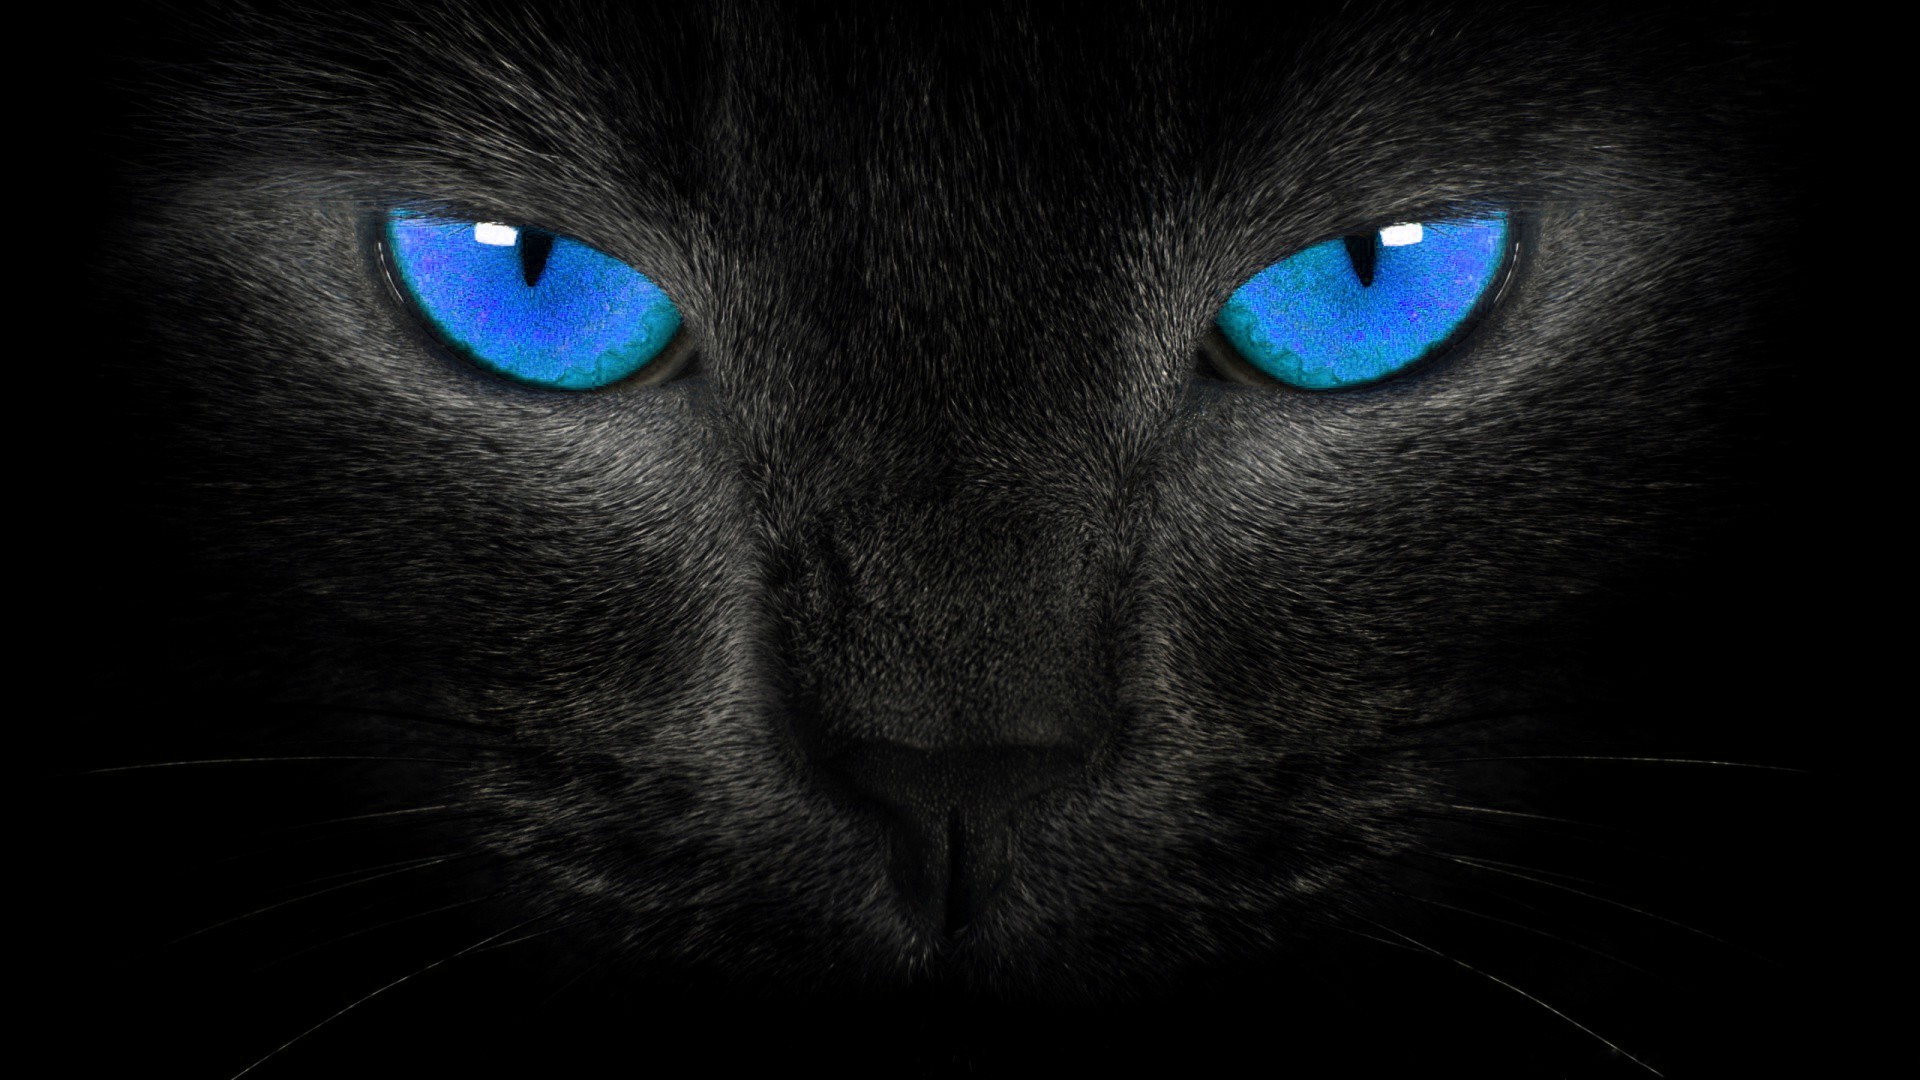 hd-wallpapers-blackblue-wallpaper-black-cat-blue-eyes-